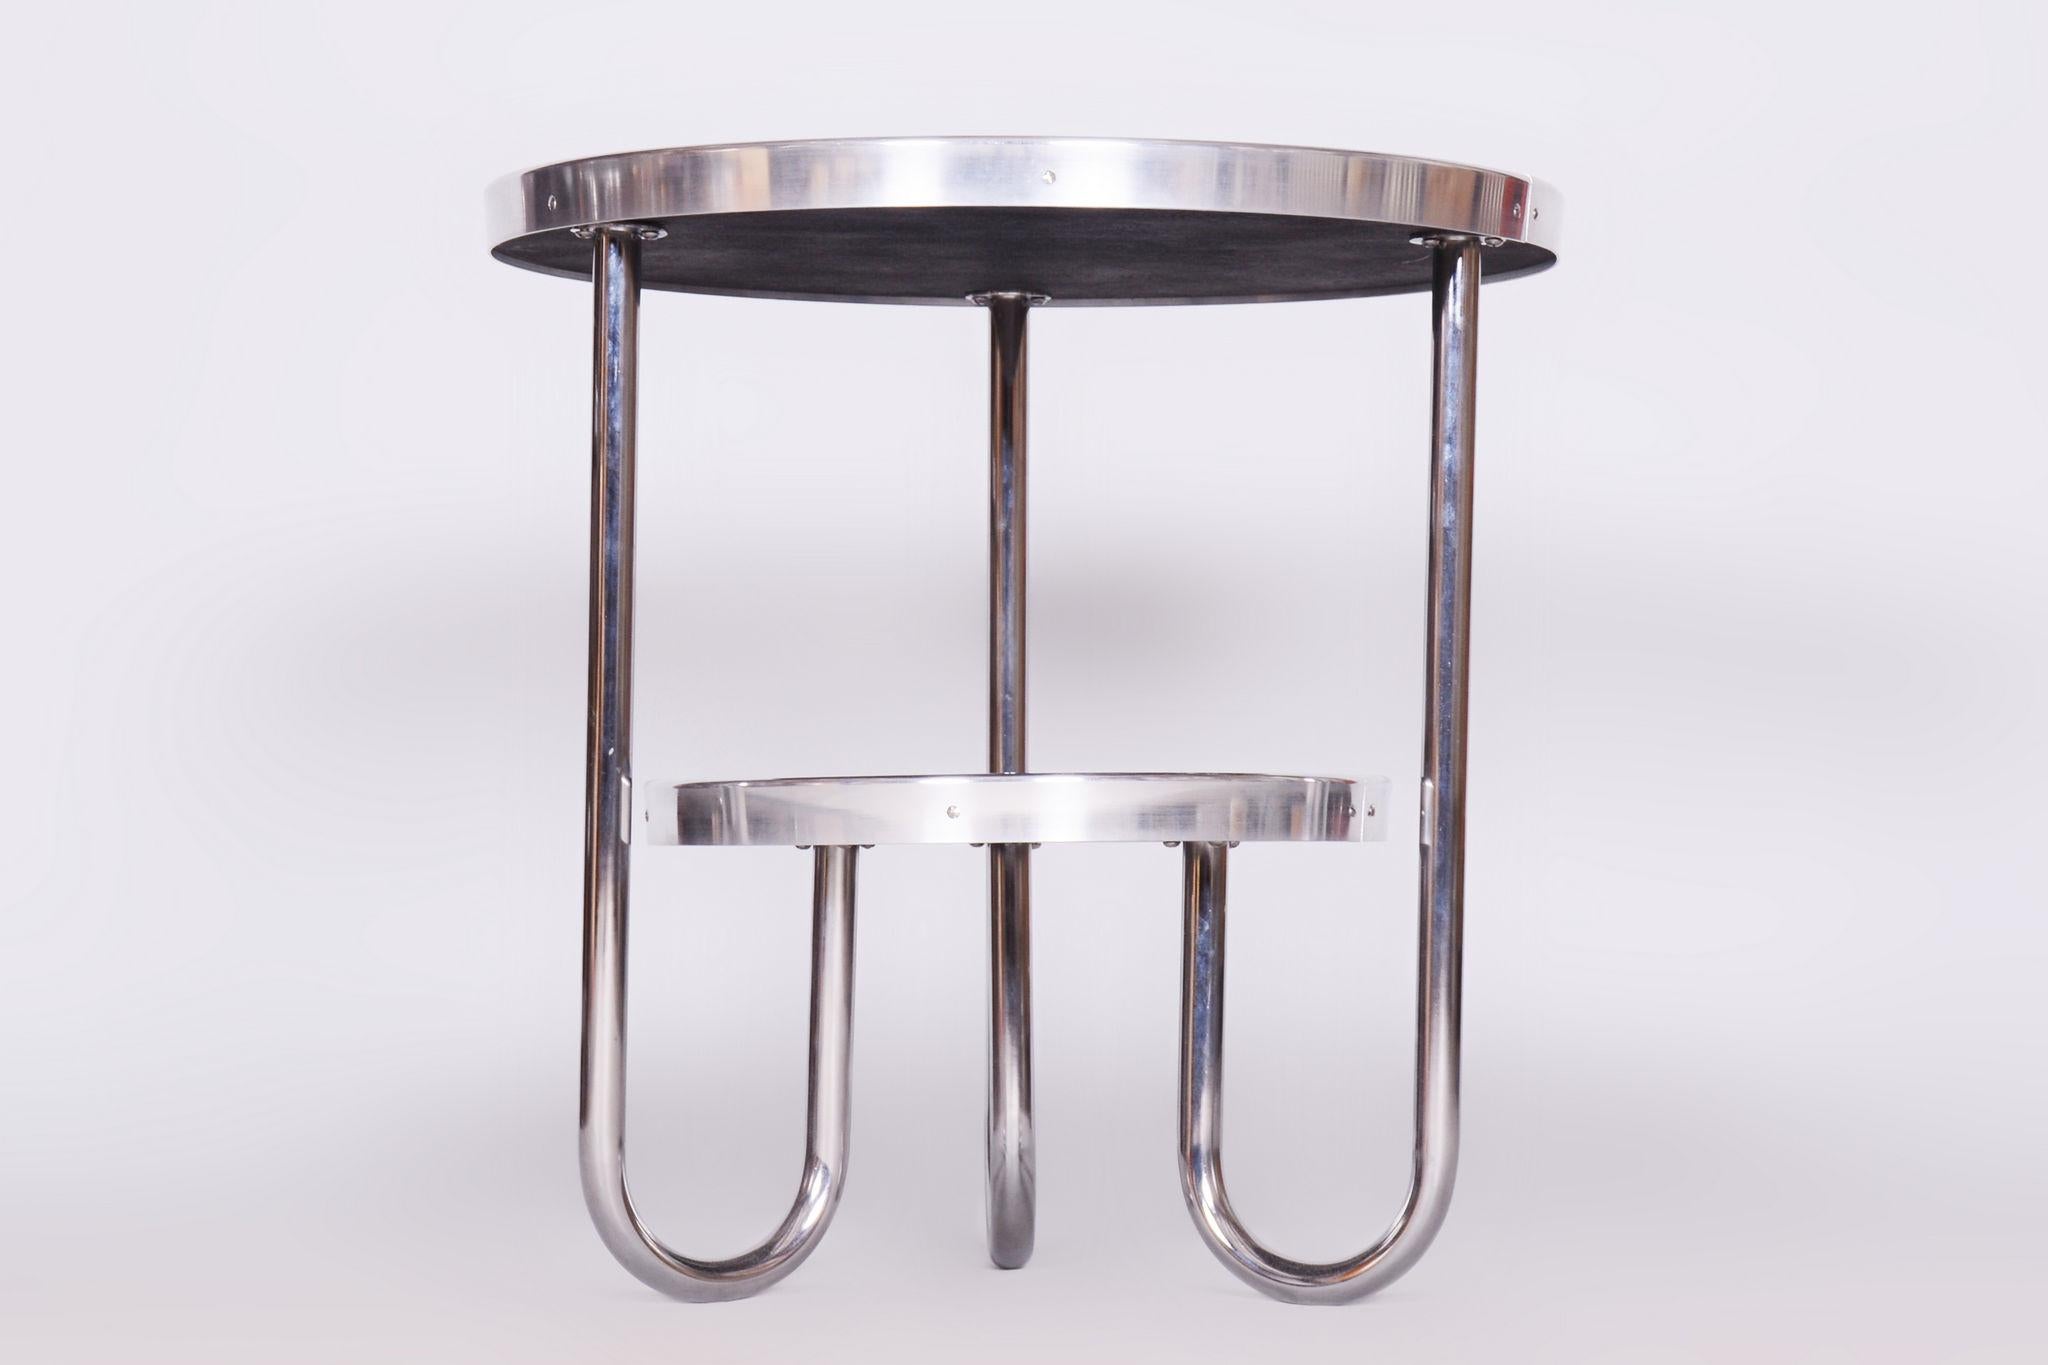 Steel Restored Bauhaus Small Table, Kovona, Spruce, Chrome, Czechia, 1930s For Sale